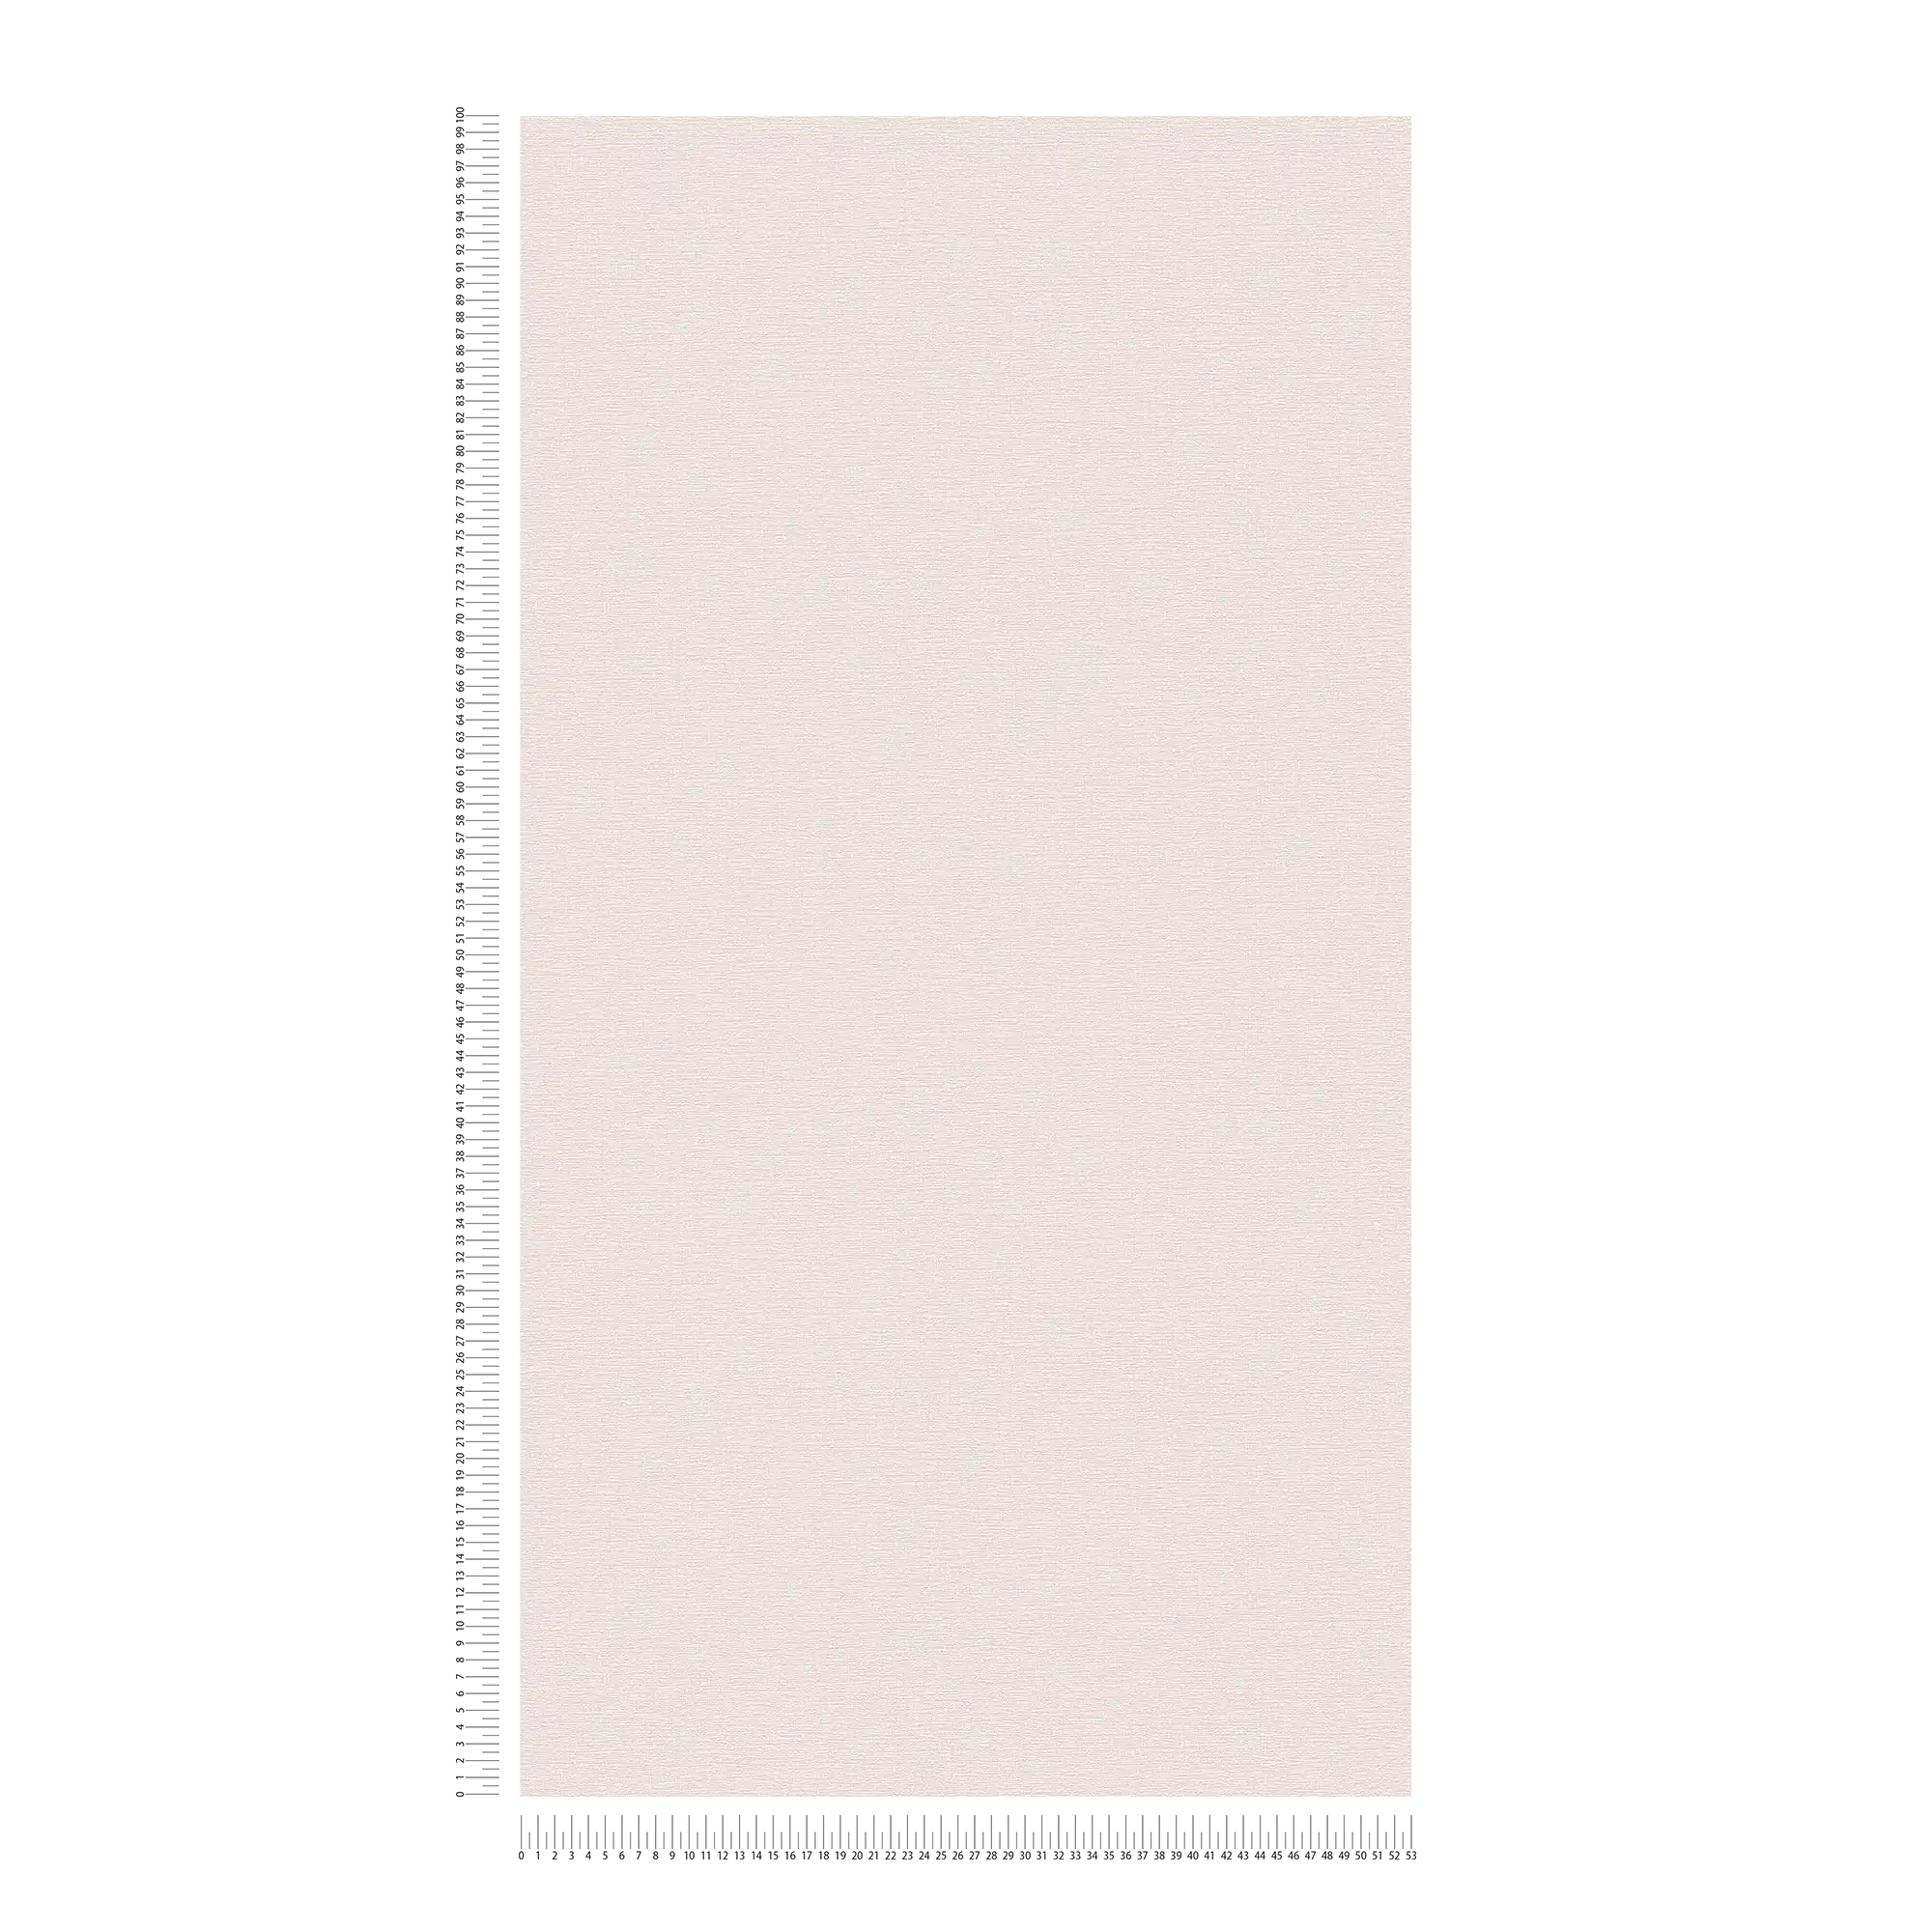             Single-coloured non-woven wallpaper in a delicate shade - light pink
        